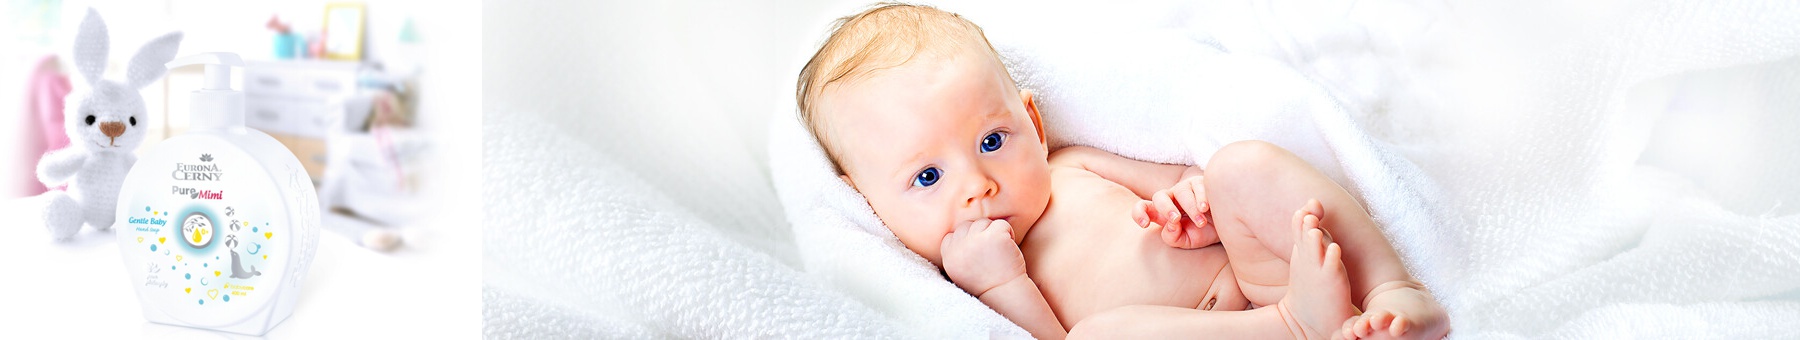 Eurona Cerny Pure Mimi Gentle Baby Soap